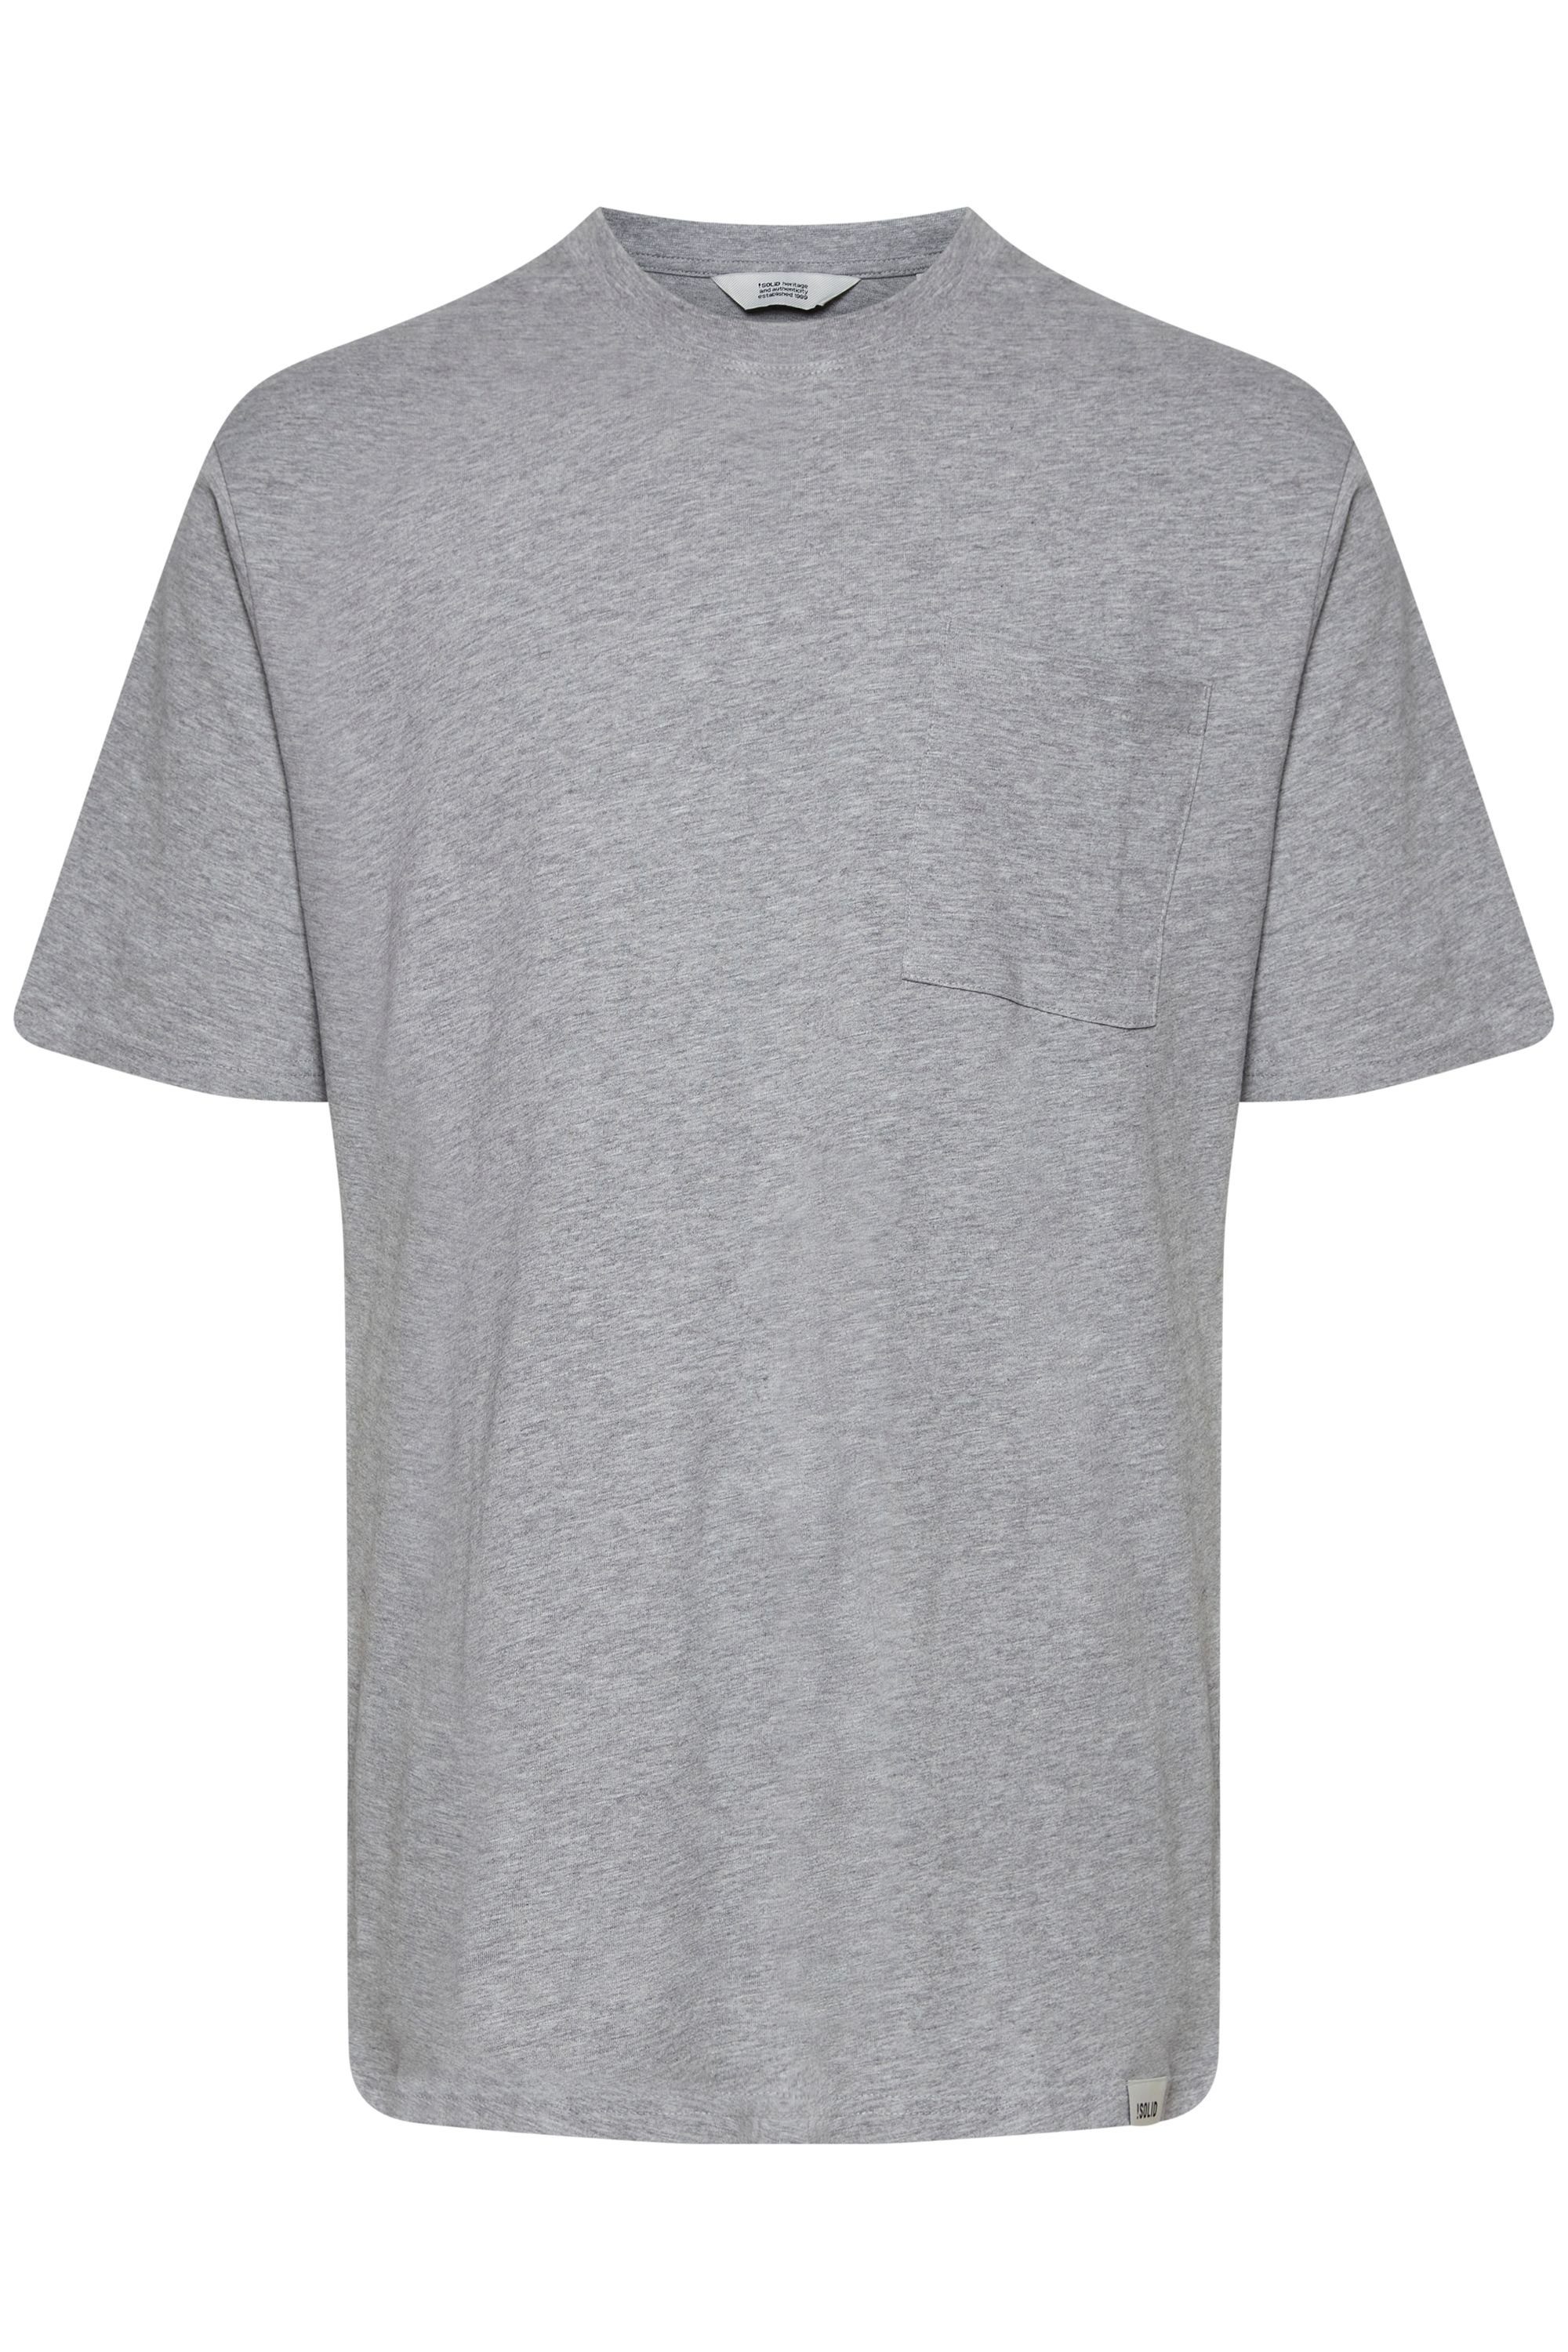 (1541011) Light SDDurant Grey T-Shirt 21107372 Melange S !Solid